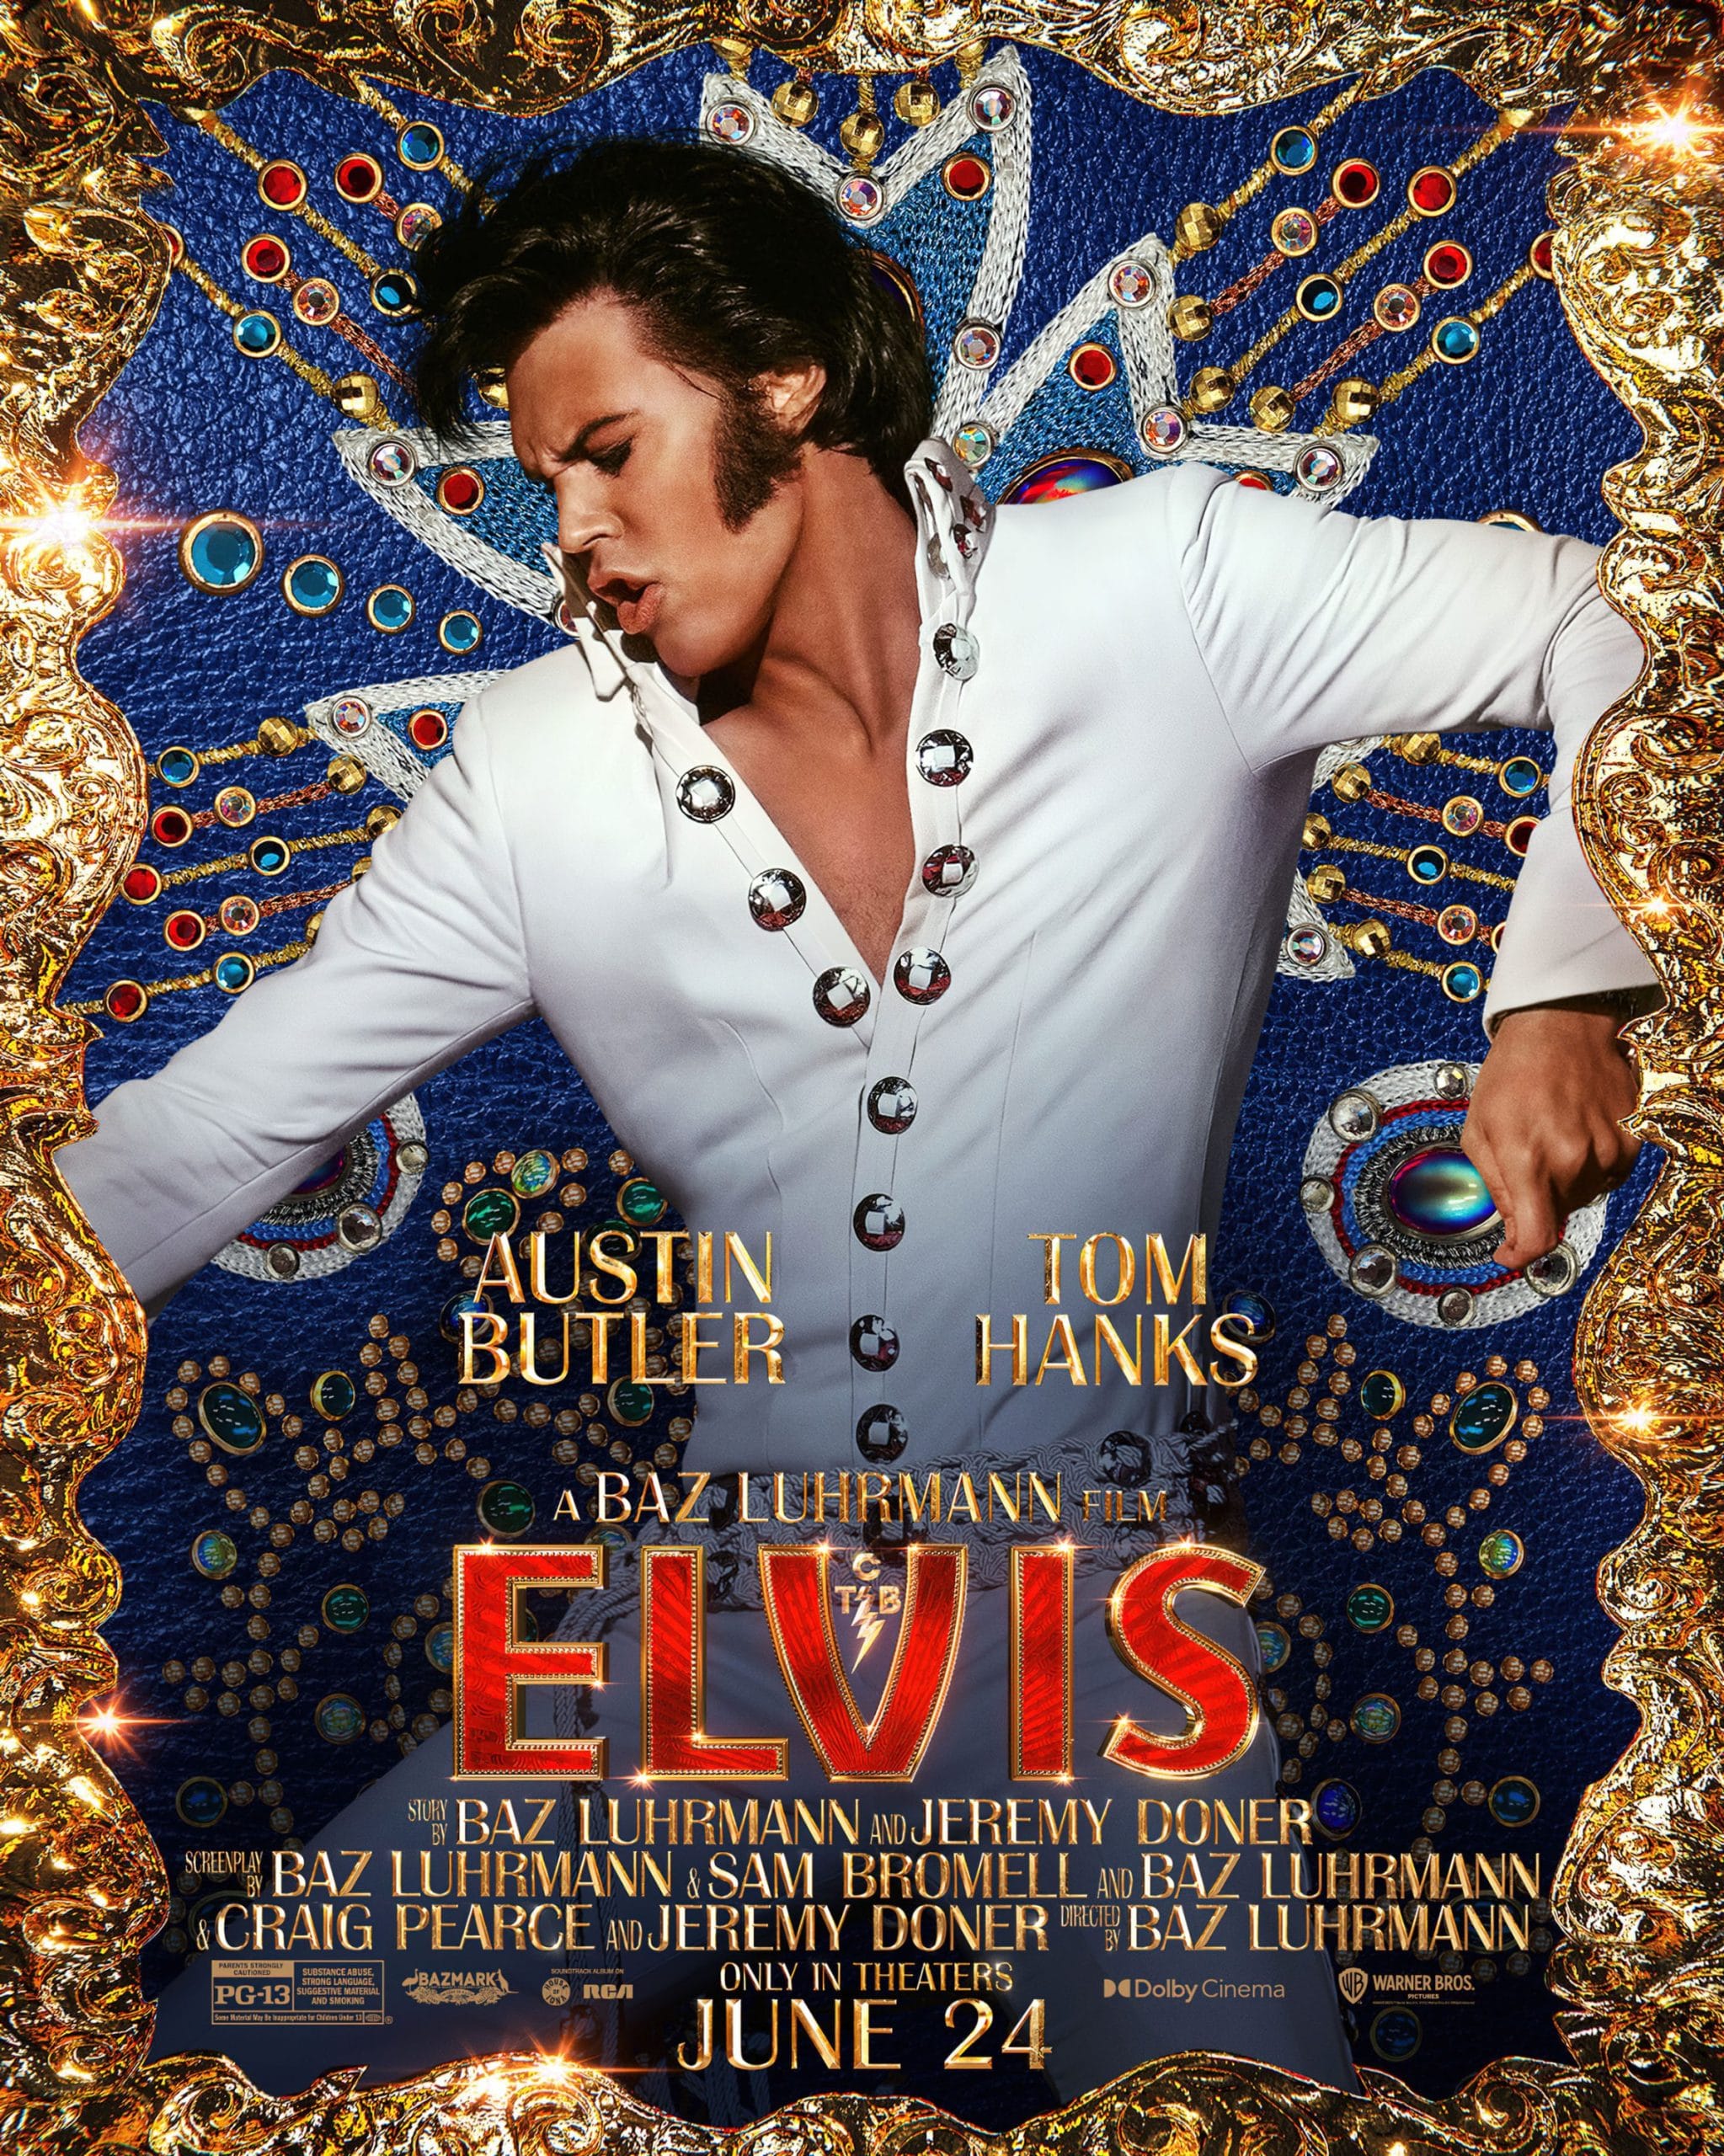 ELVIS, US poster, Austin Butler as Elvis Presley, 2022